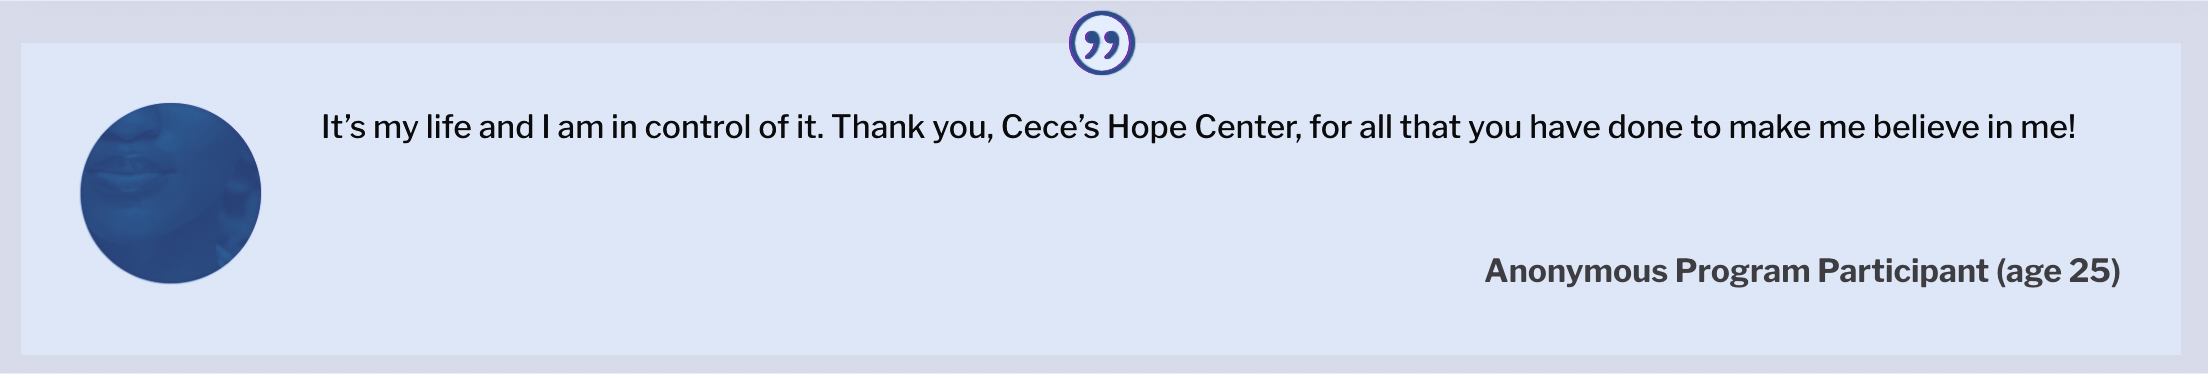 CeCe's Hope Center